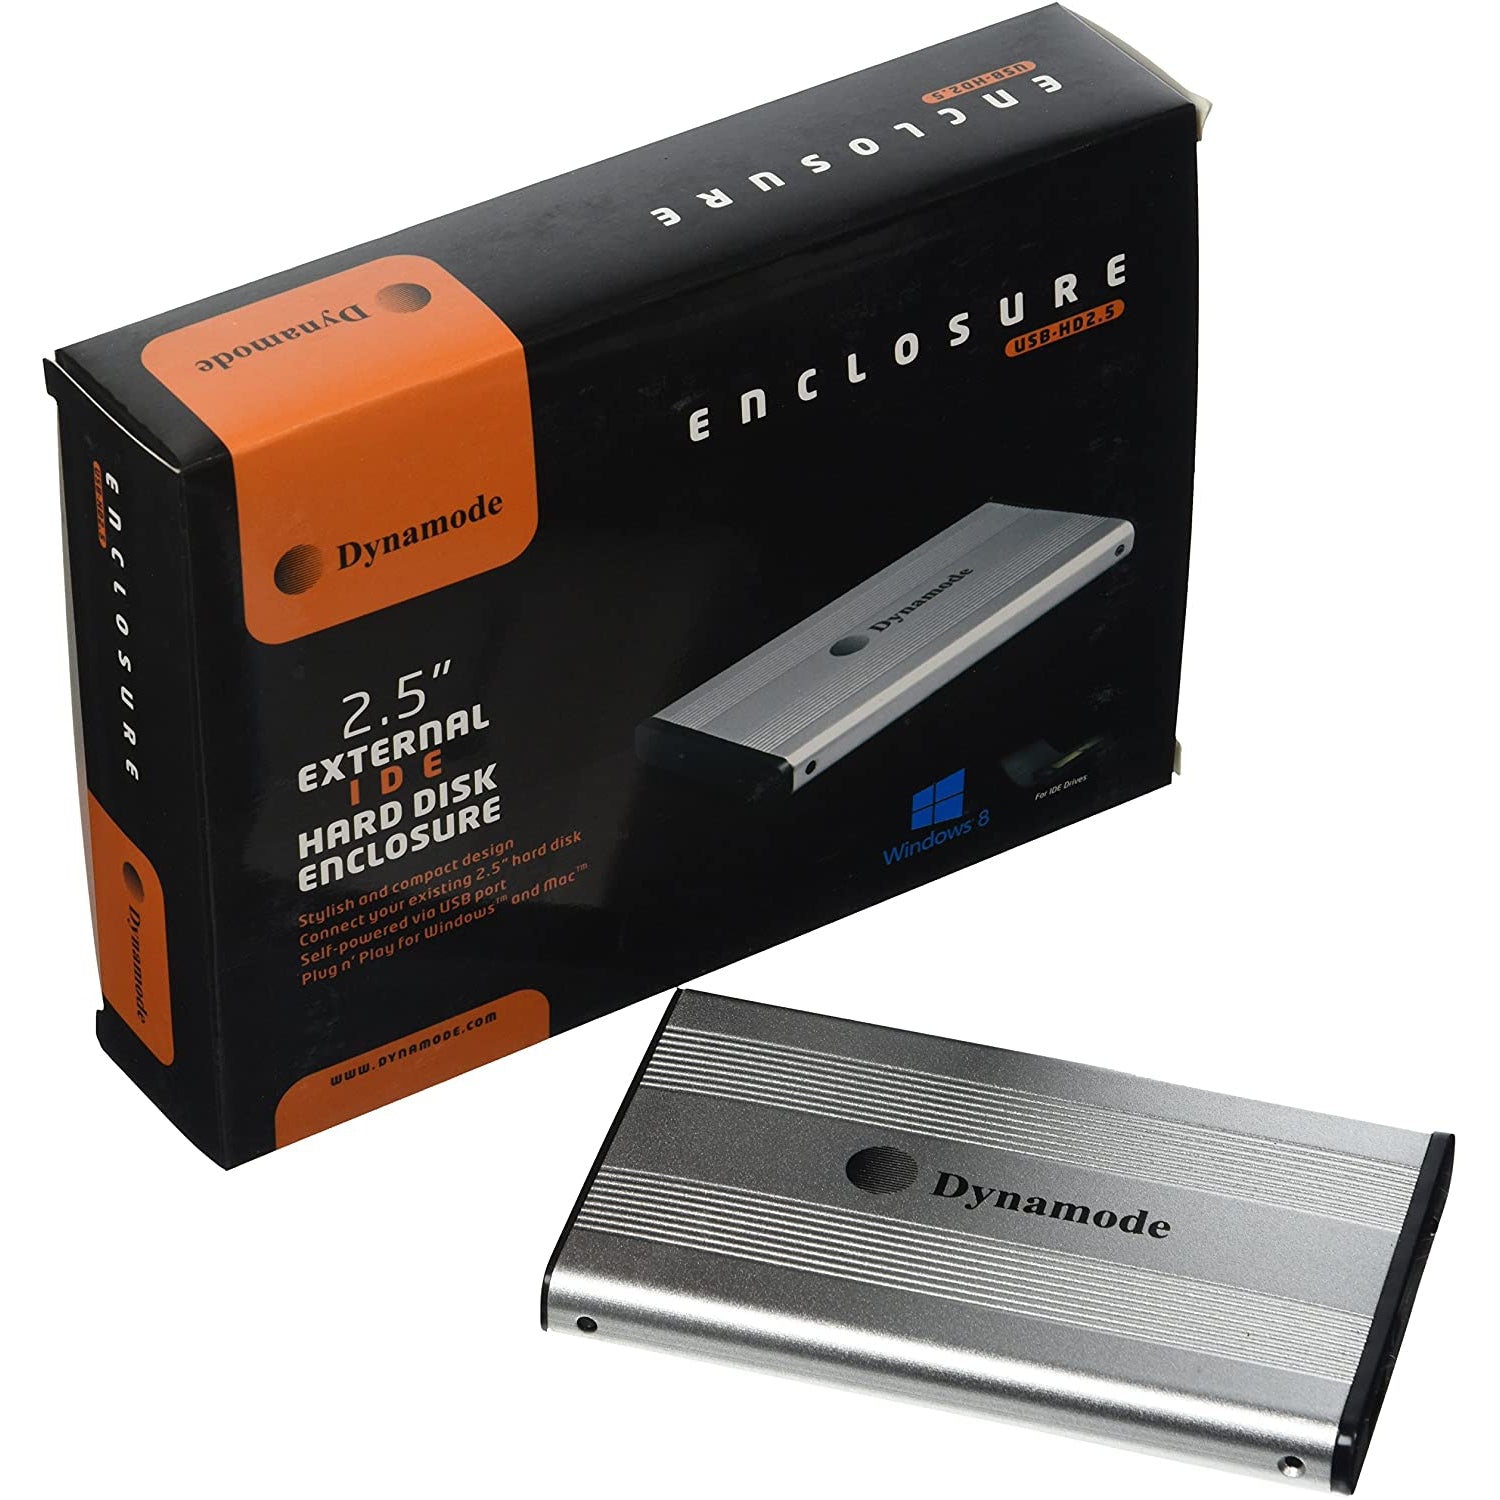 Dynamode USB-HD2.5 2.5-inch External USB2.0 Hard Disk Enclosure